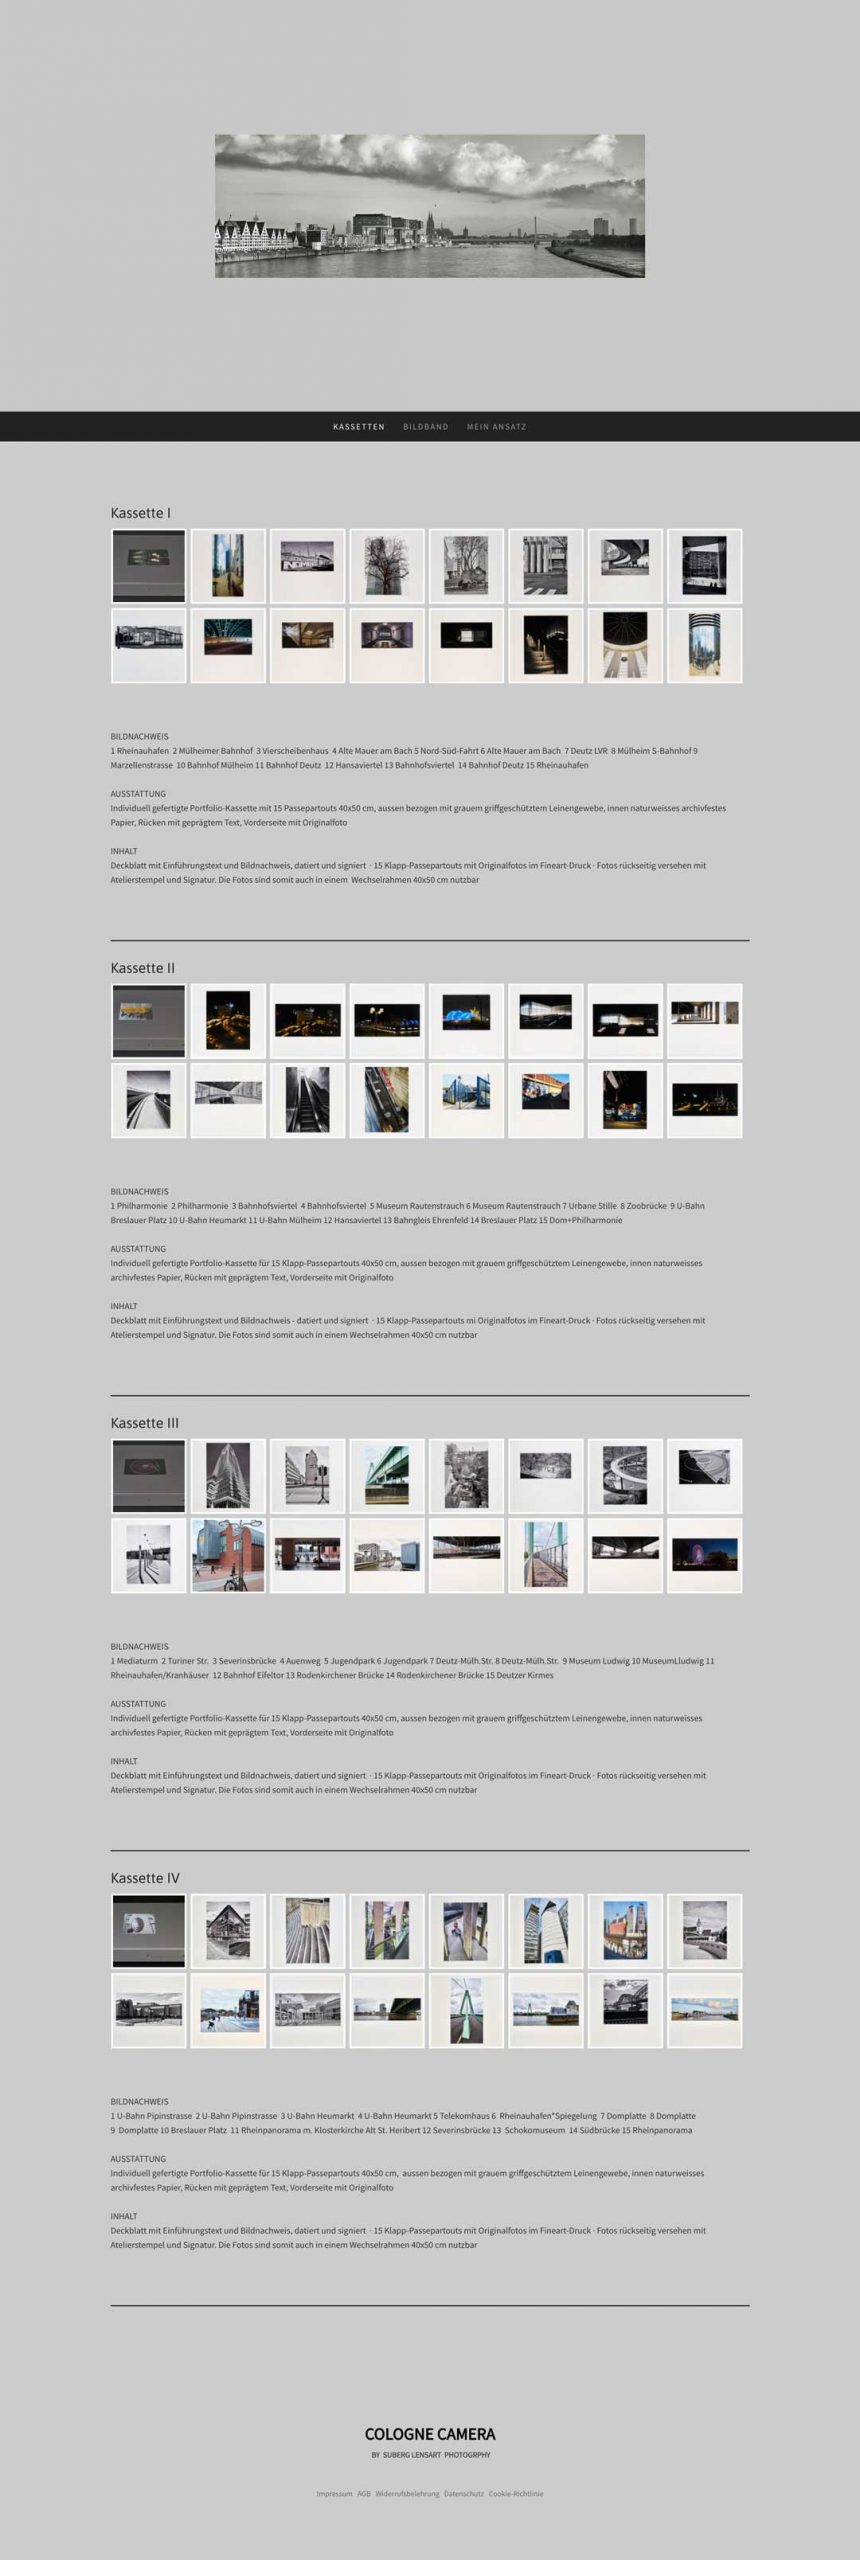 Referenz Design Sara Hoffmann Website Cologne Camera